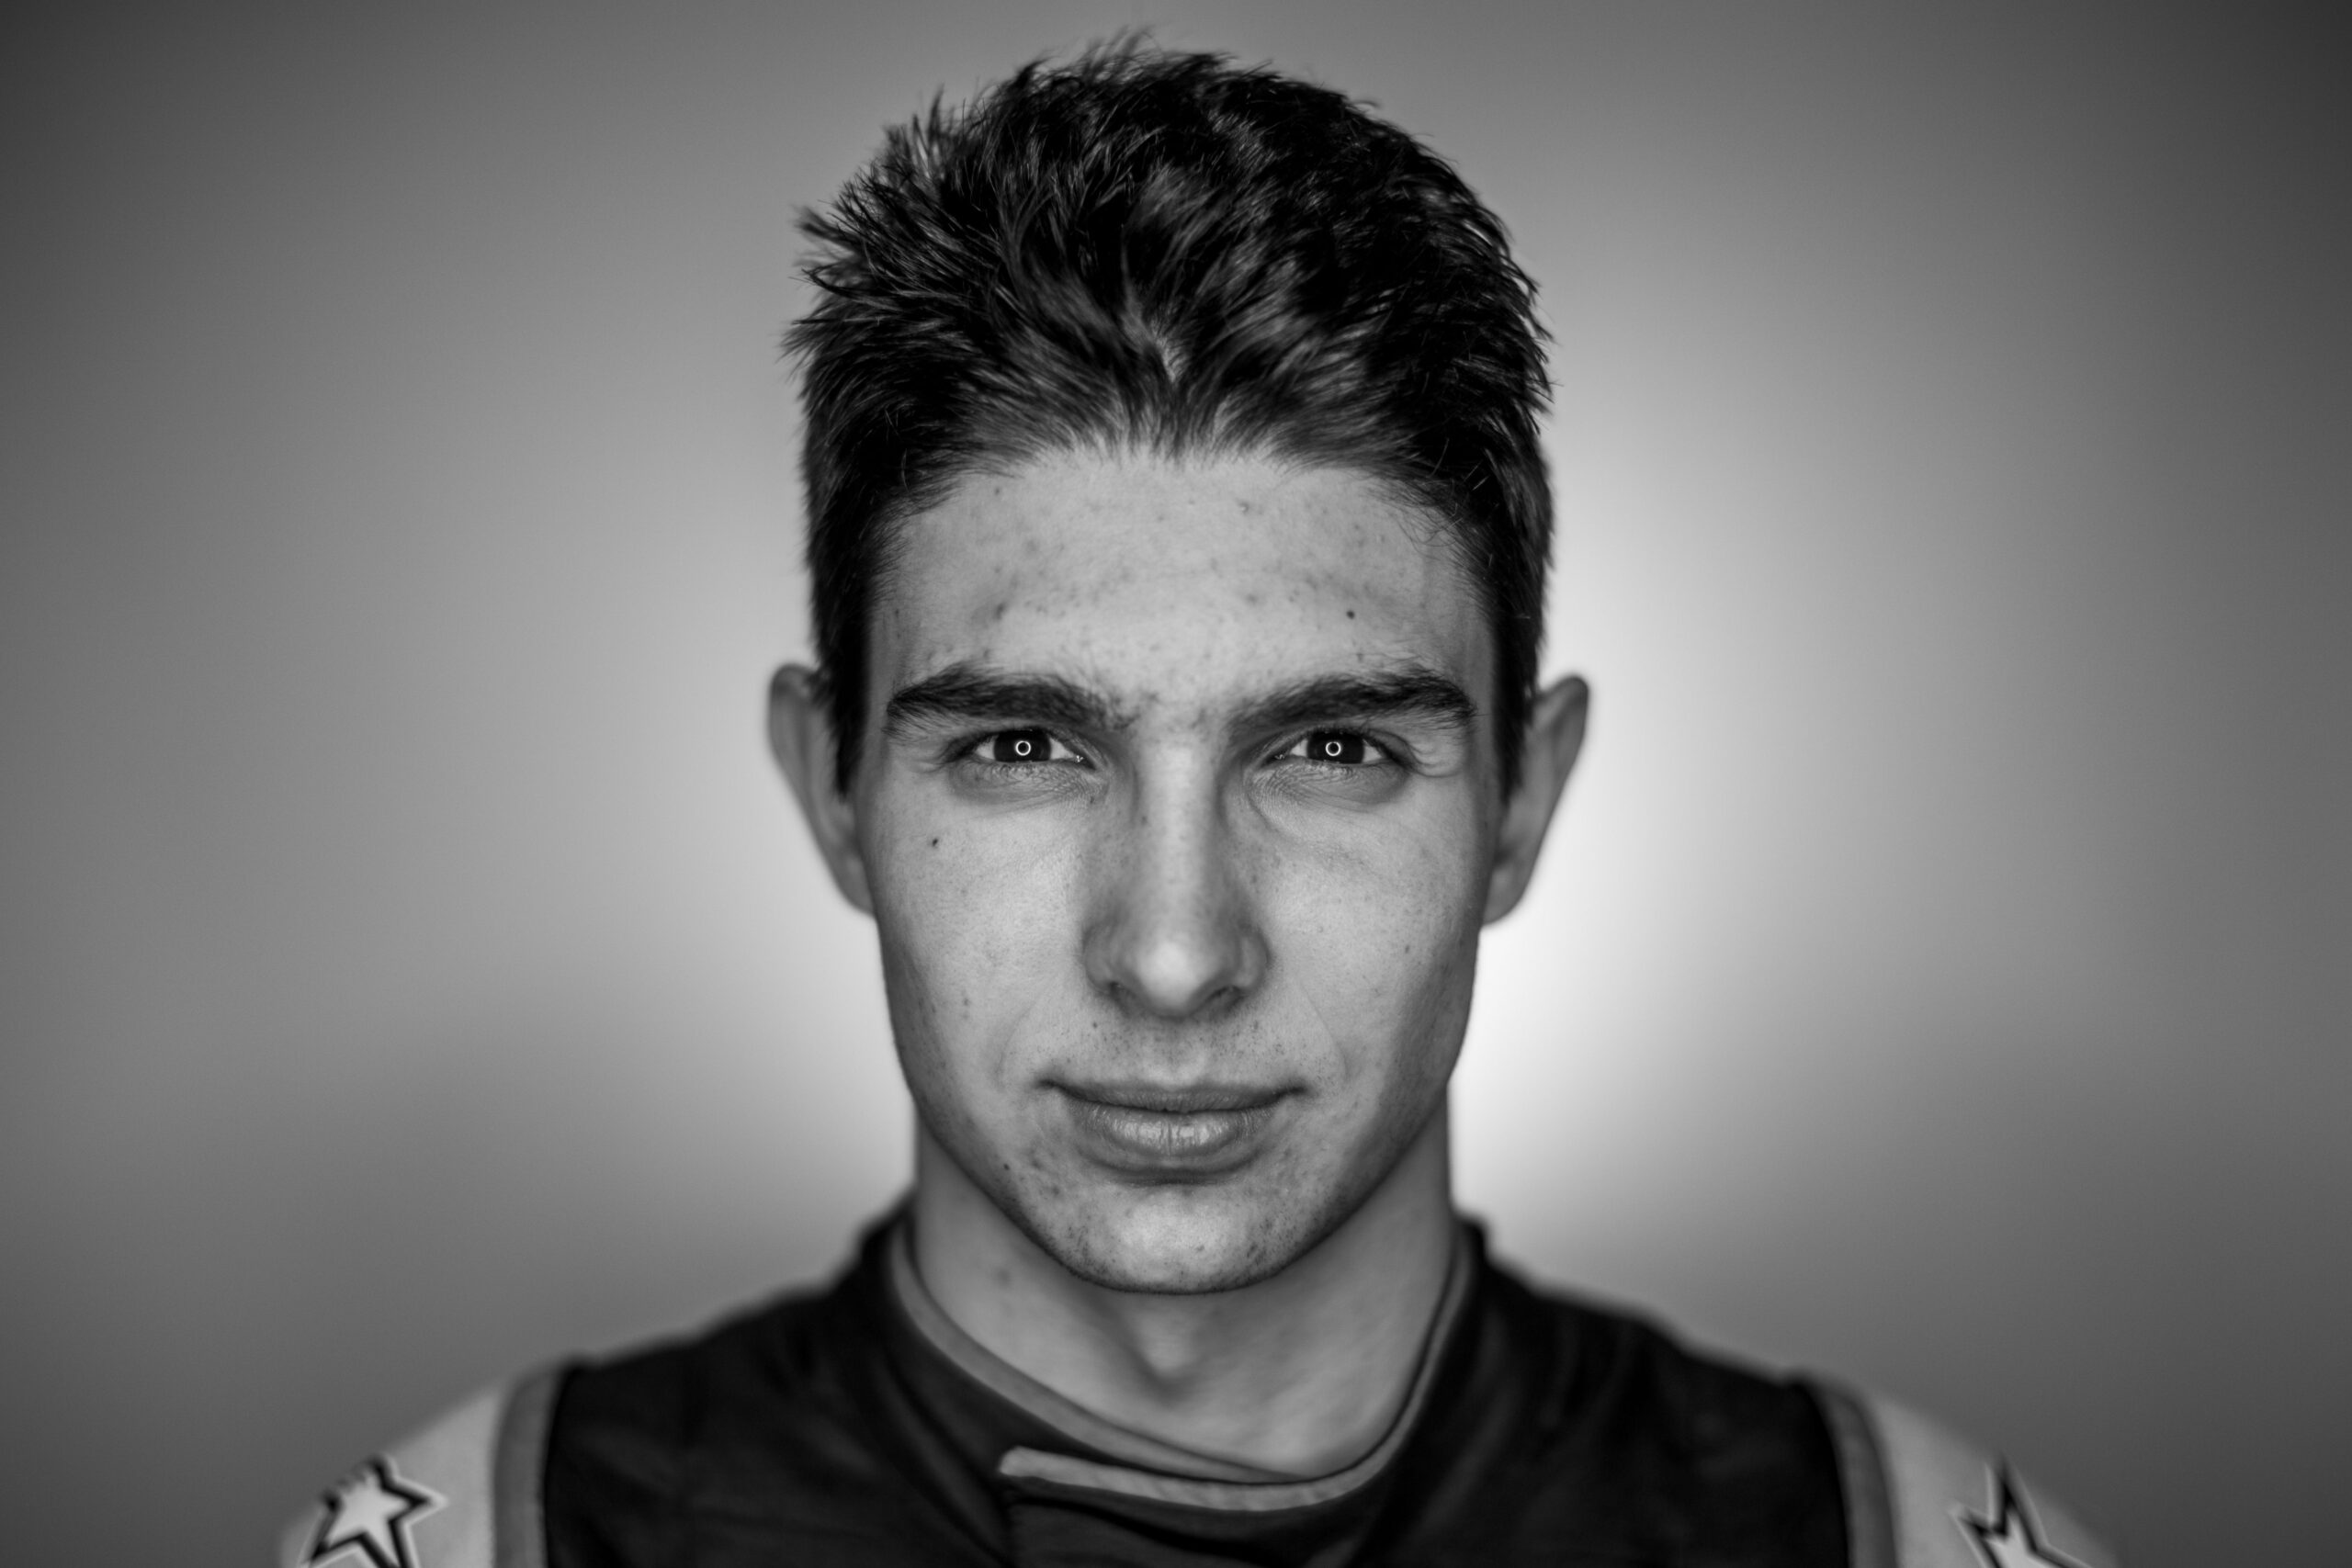 2017 Formula One Driver Portraits